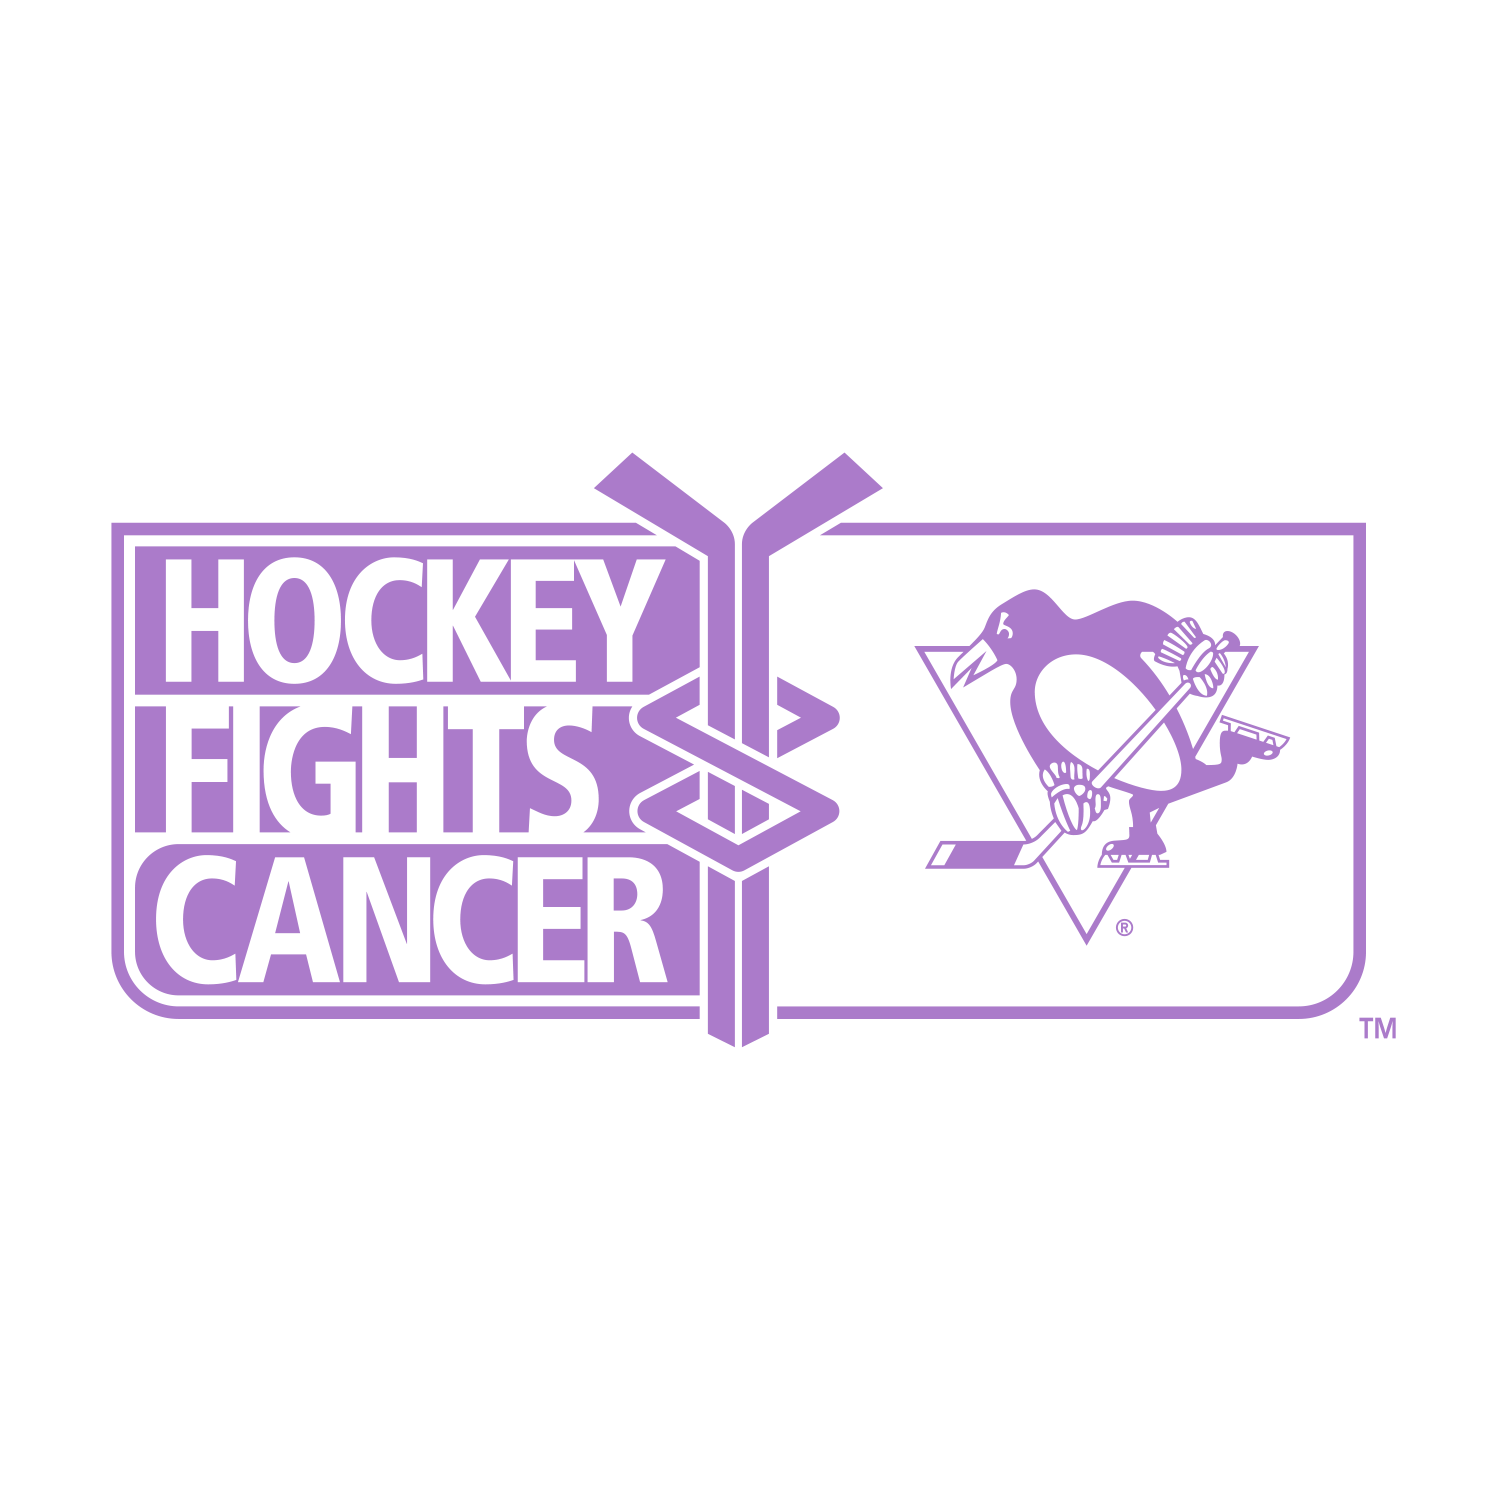 penguins hockey fights cancer 2019